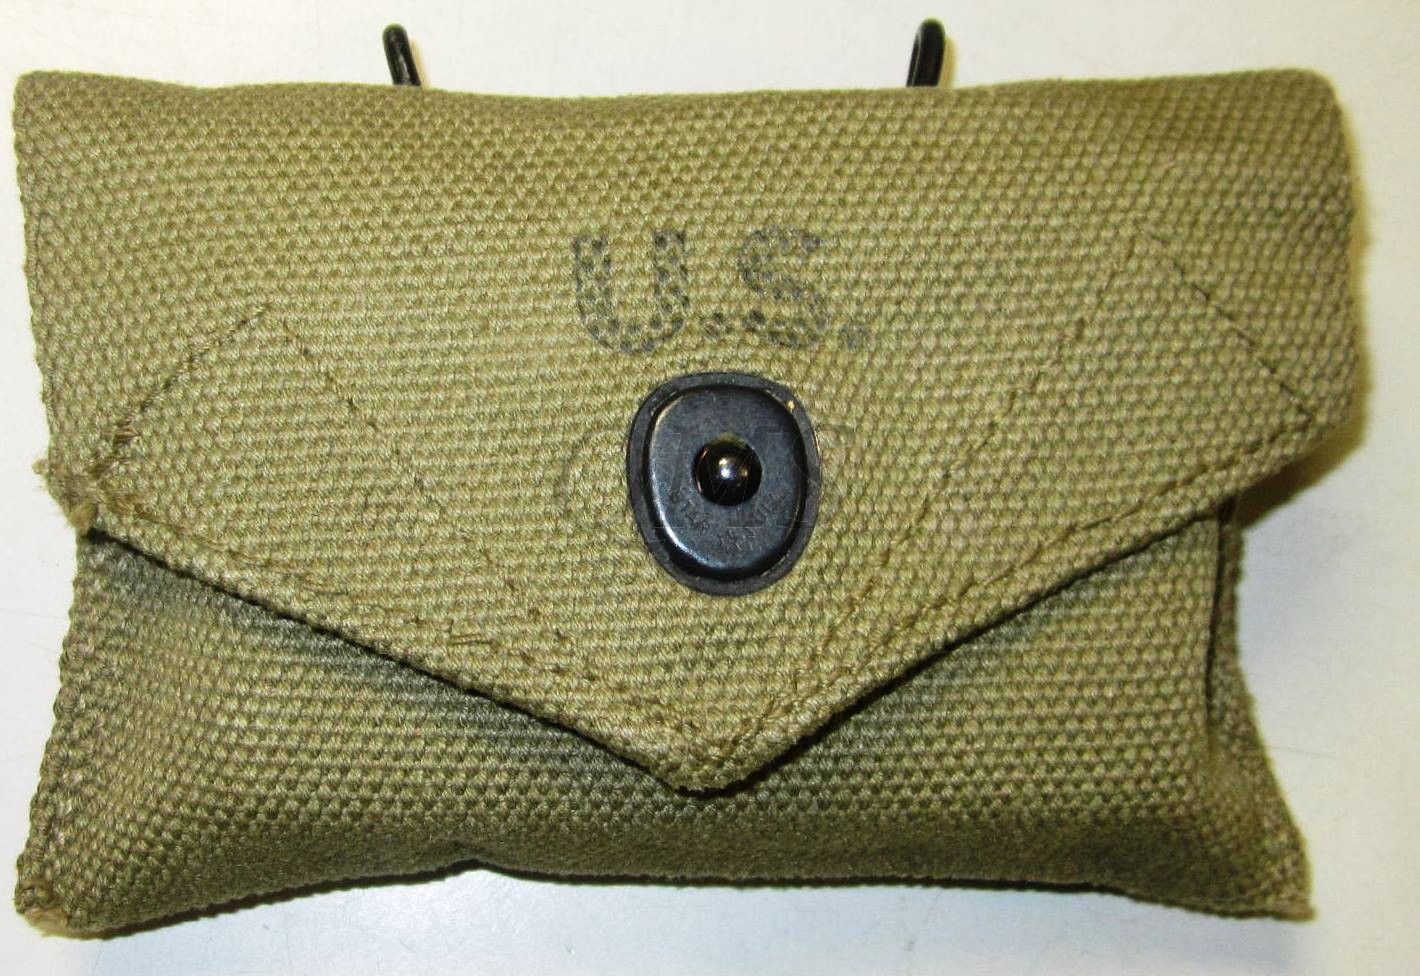 US Army Verbandspäckchen Tasche First Aid Medical Corps Pouch Carrier 1944 WK2 